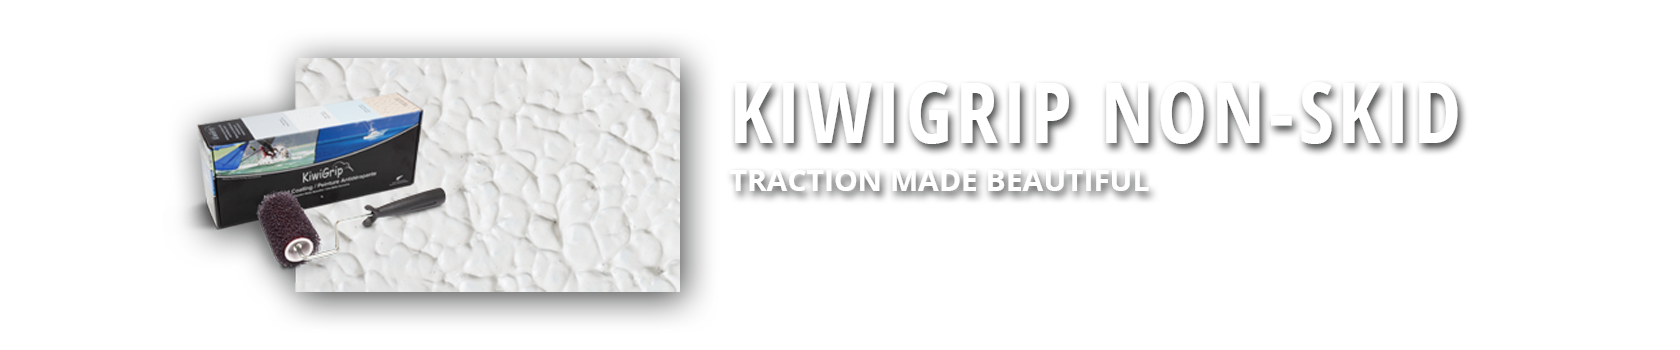 KiwiGrip Non-Skid